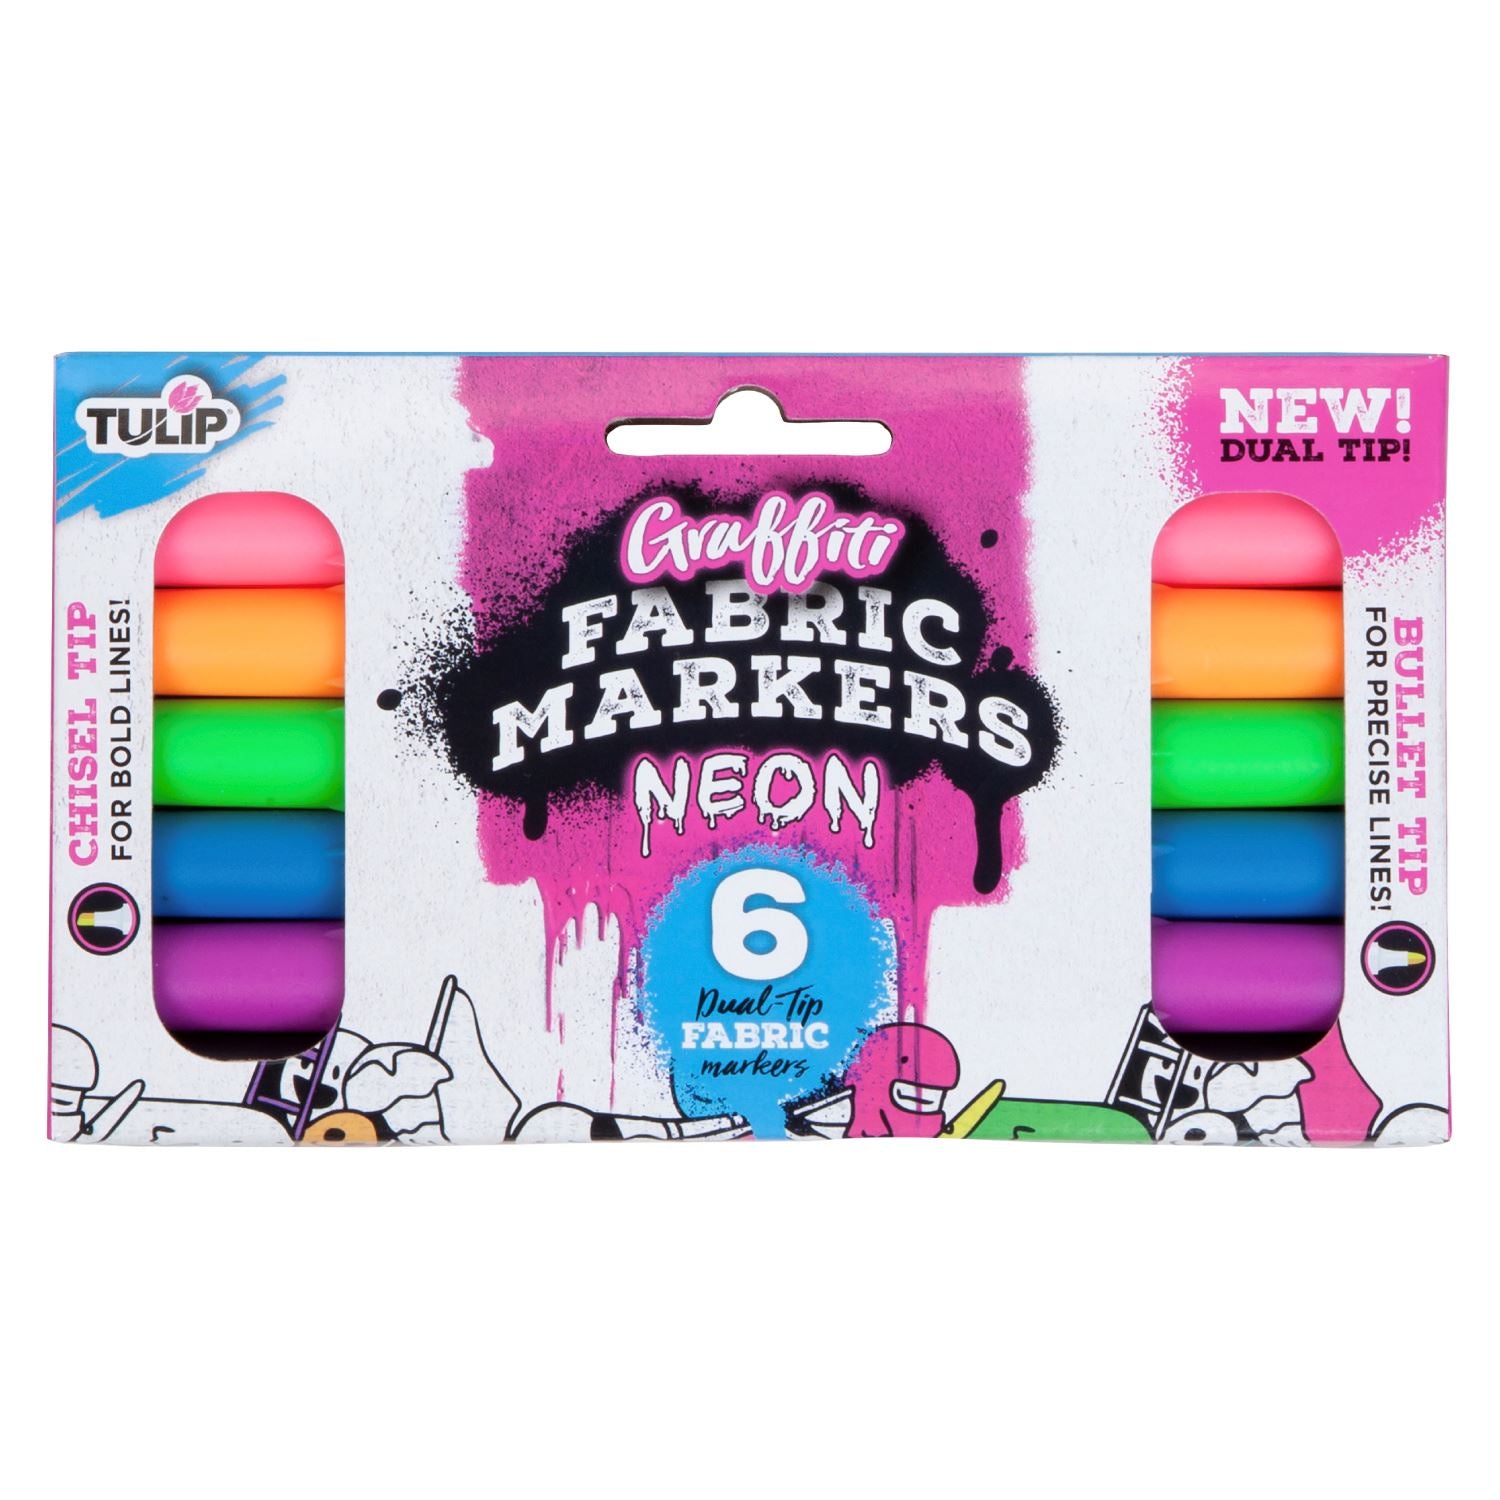 Tulip Graffiti Dual-Tip Fabric Markers Neon 6 Pack - 1